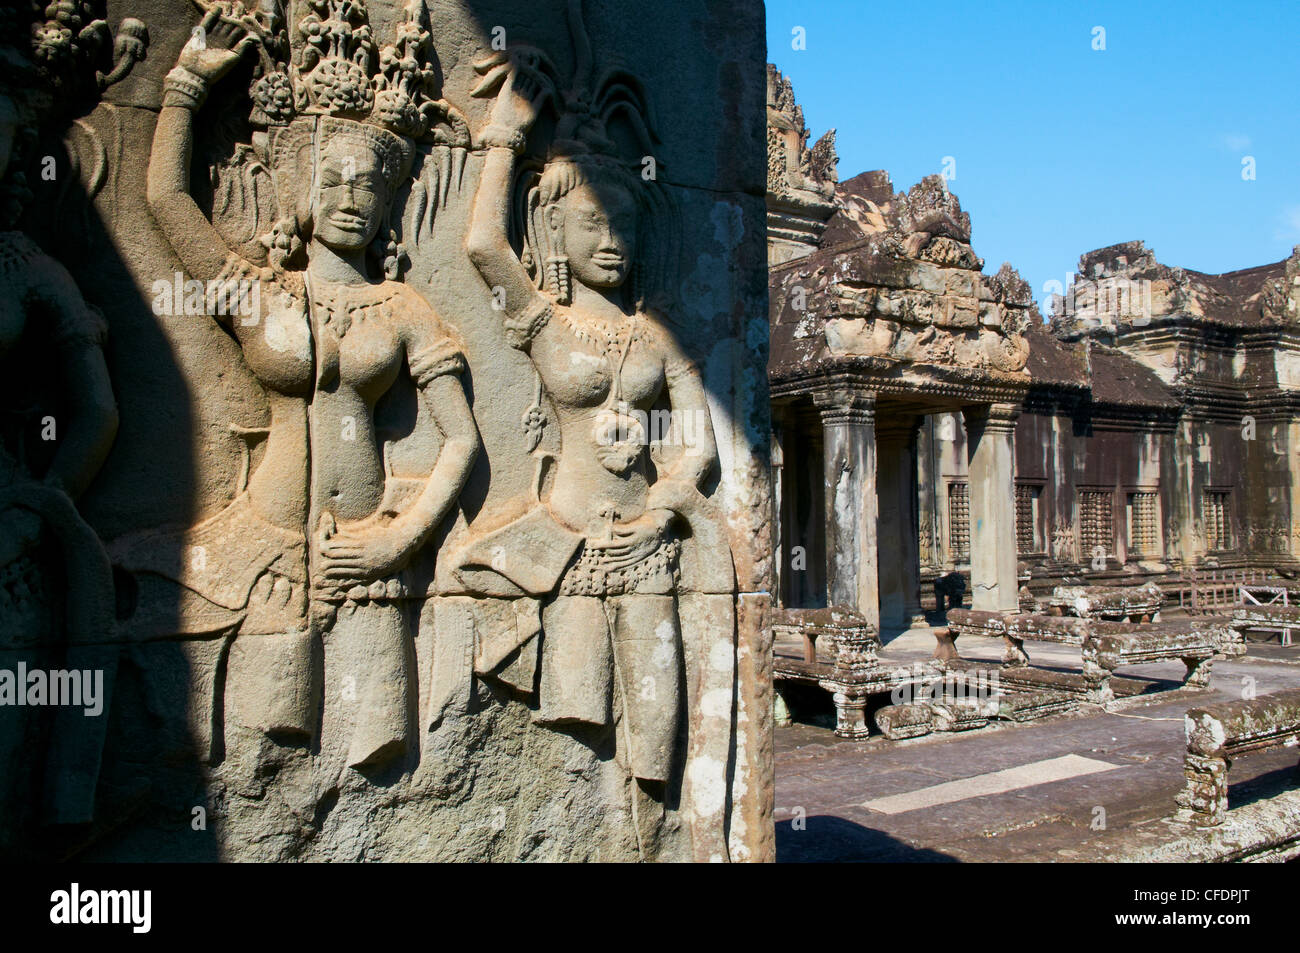 Apsara, celeste ballerino del Regno Khmer, Angkor Wat, Angkor, Siem Reap, Cambogia Foto Stock